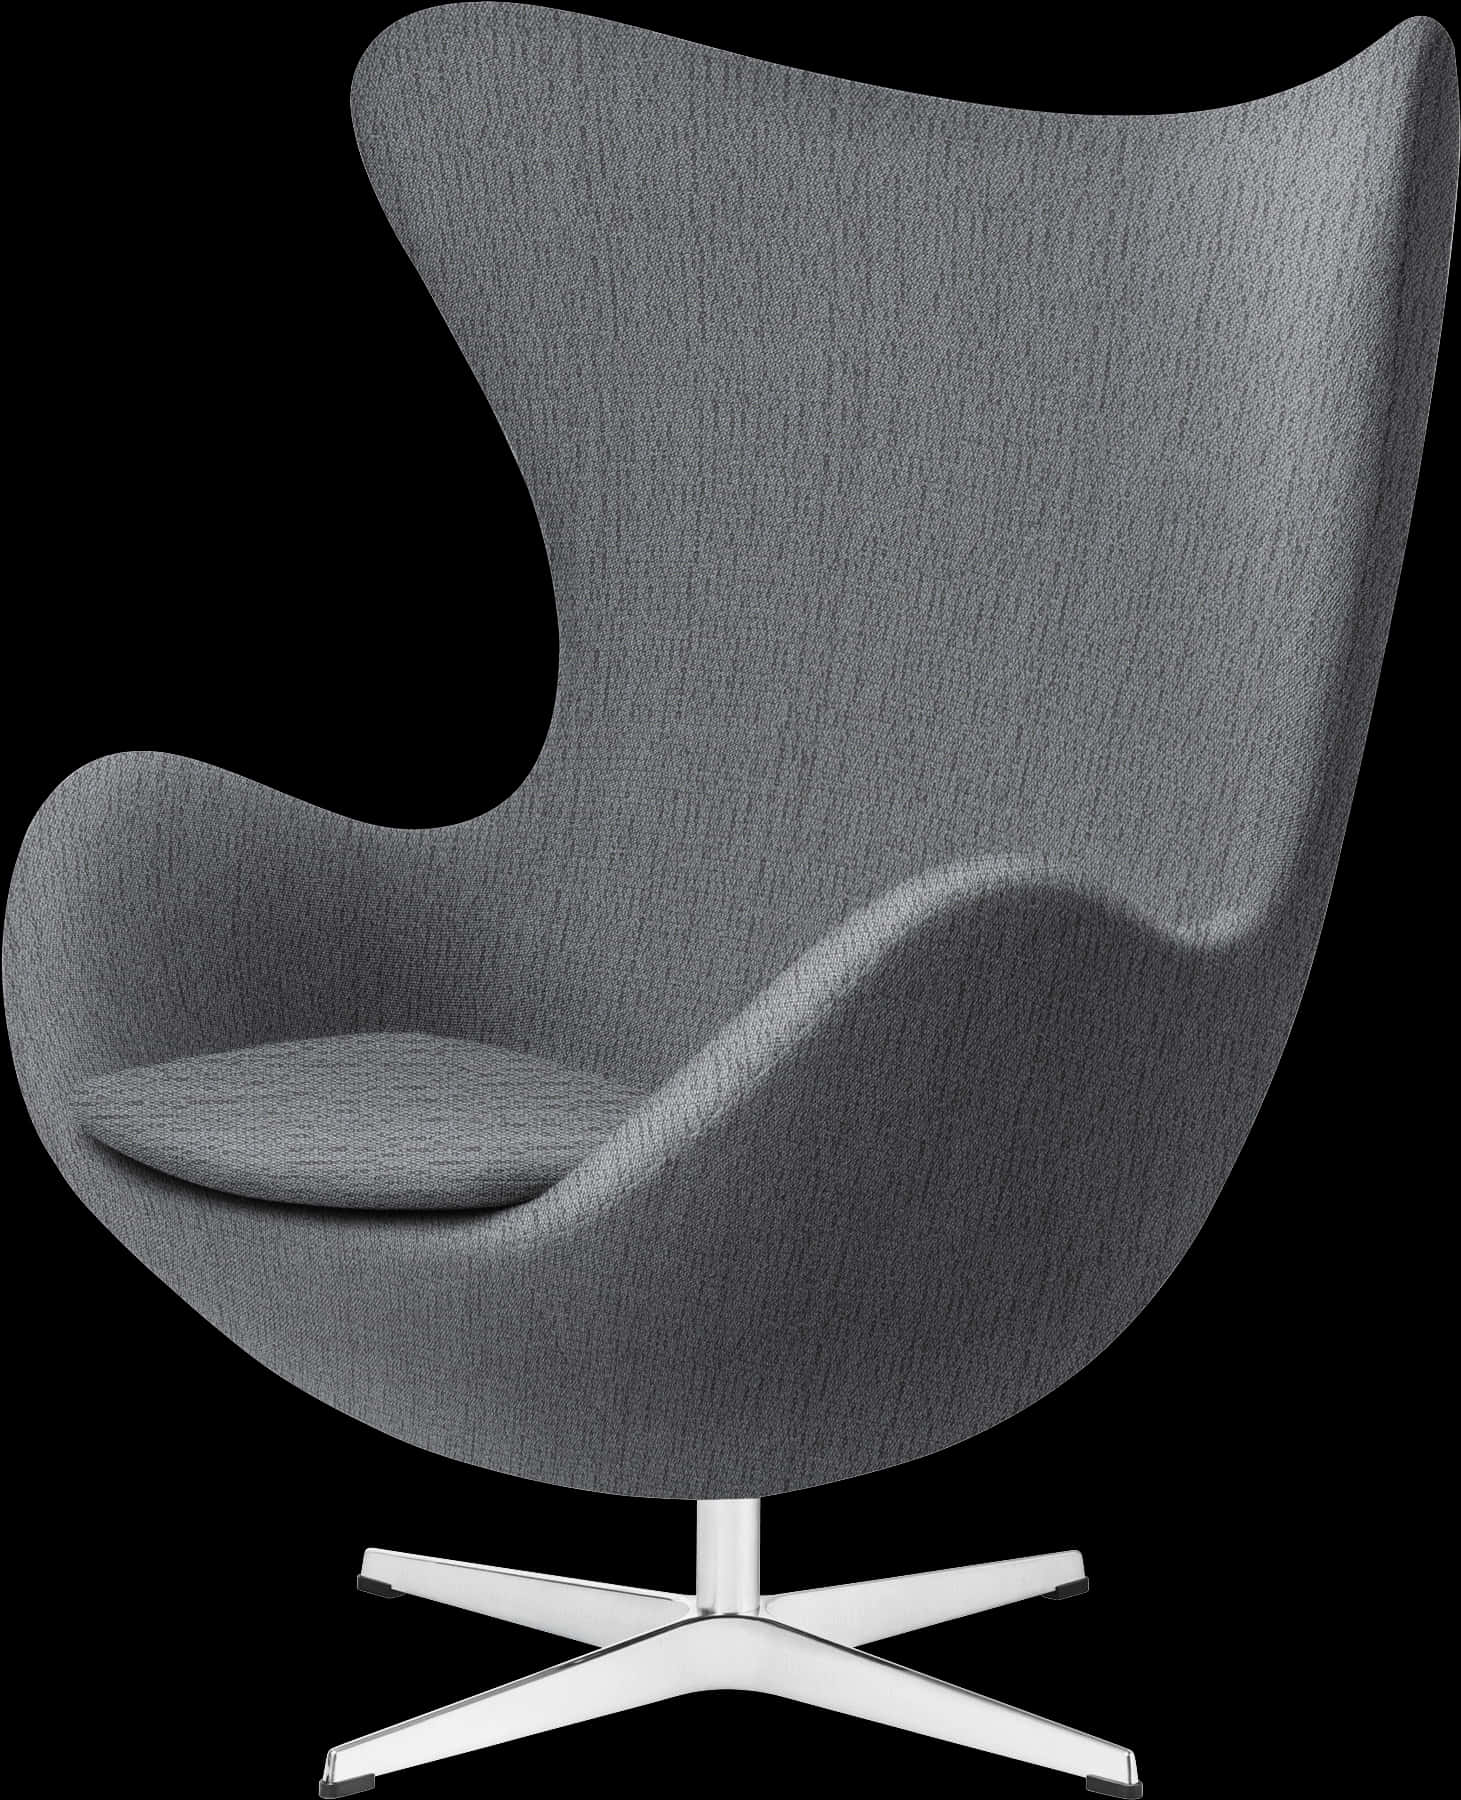 Modern Gray Egg Chair Design PNG image